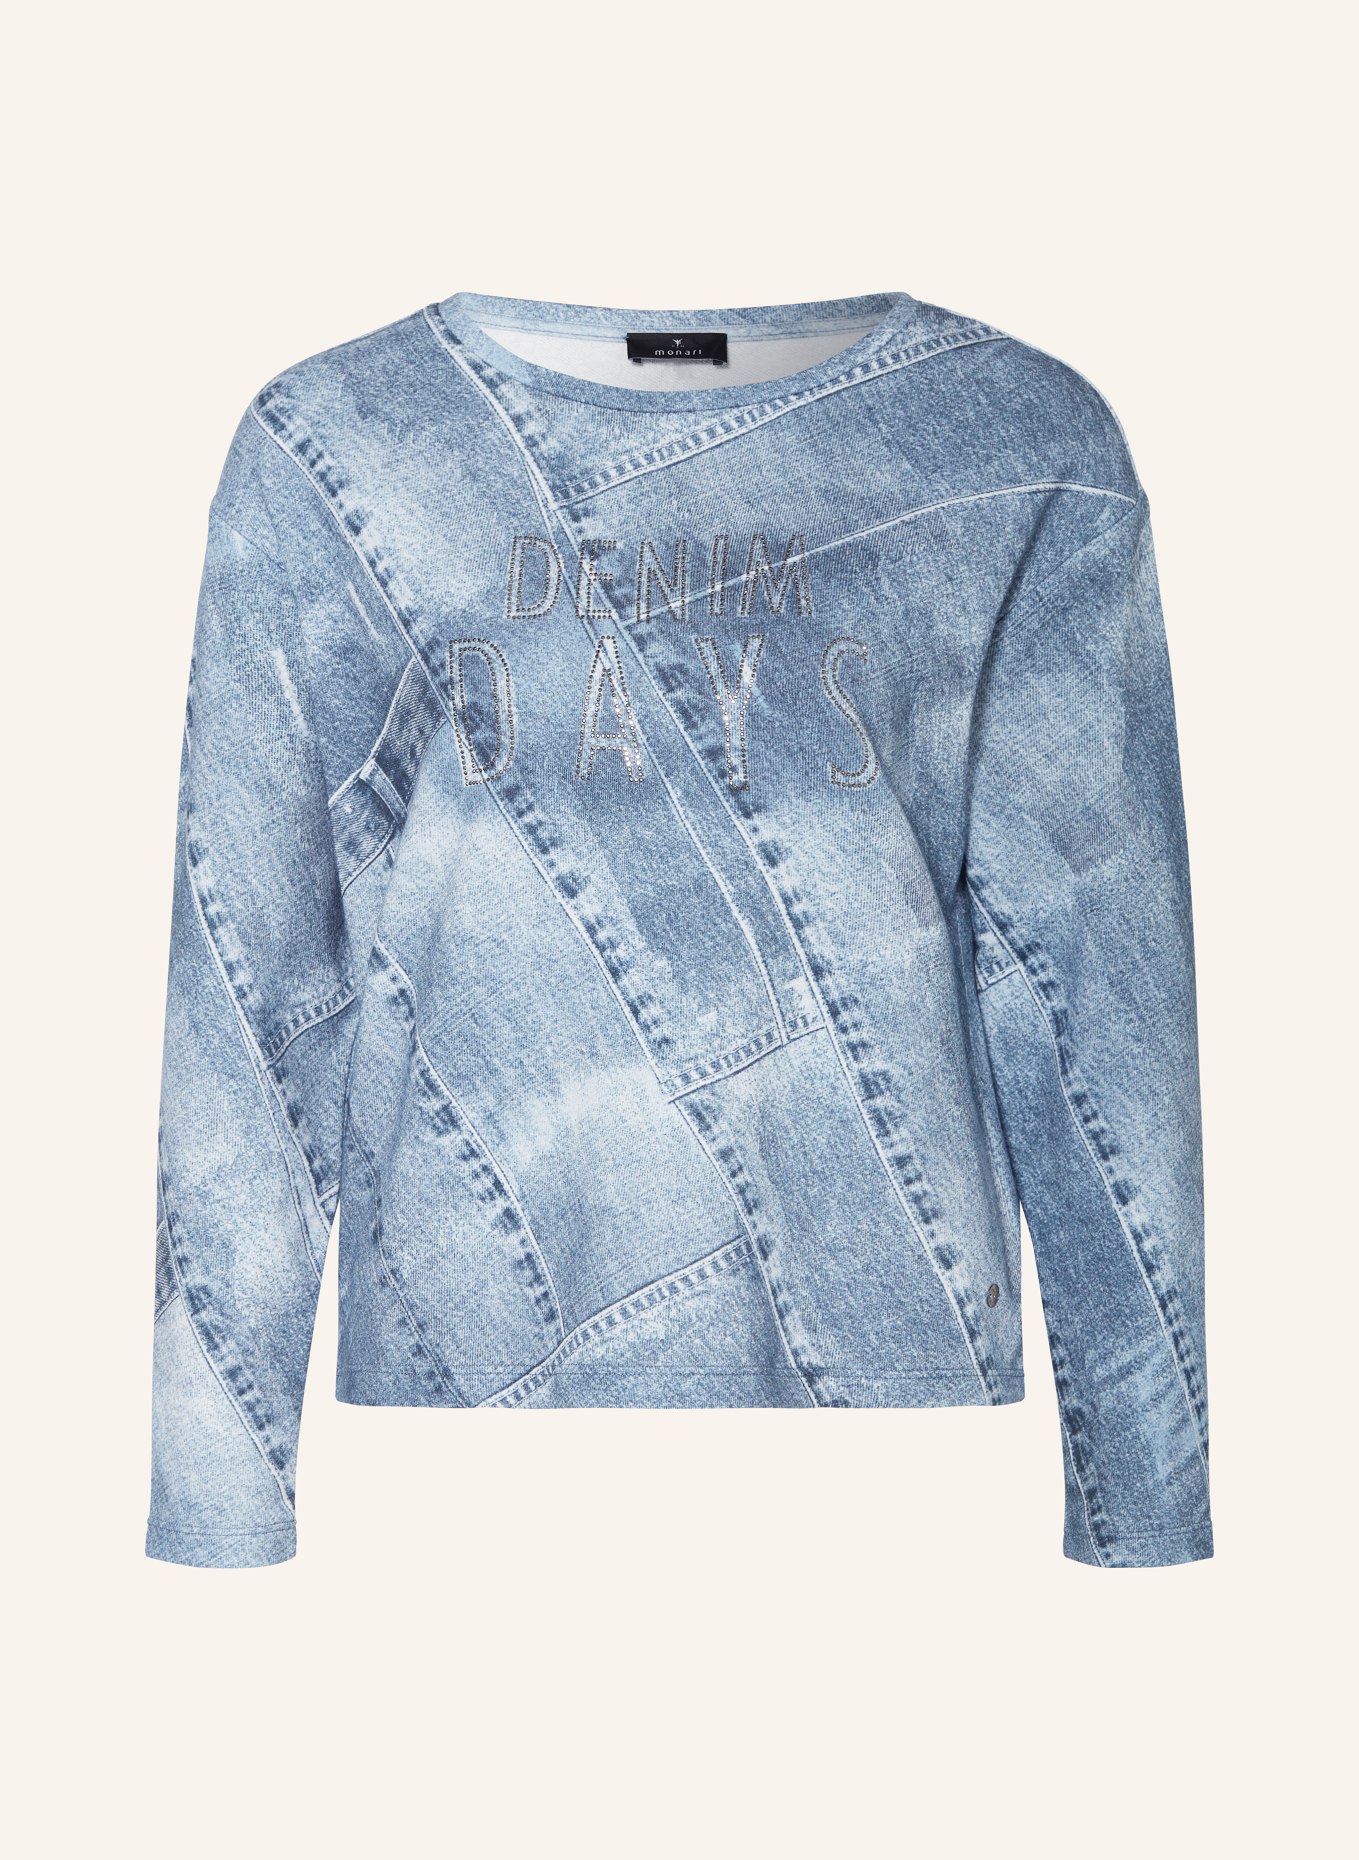 monari Sweatshirt in denim look with decorative gems, Color: BLUE/ LIGHT BLUE/ SILVER (Image 1)